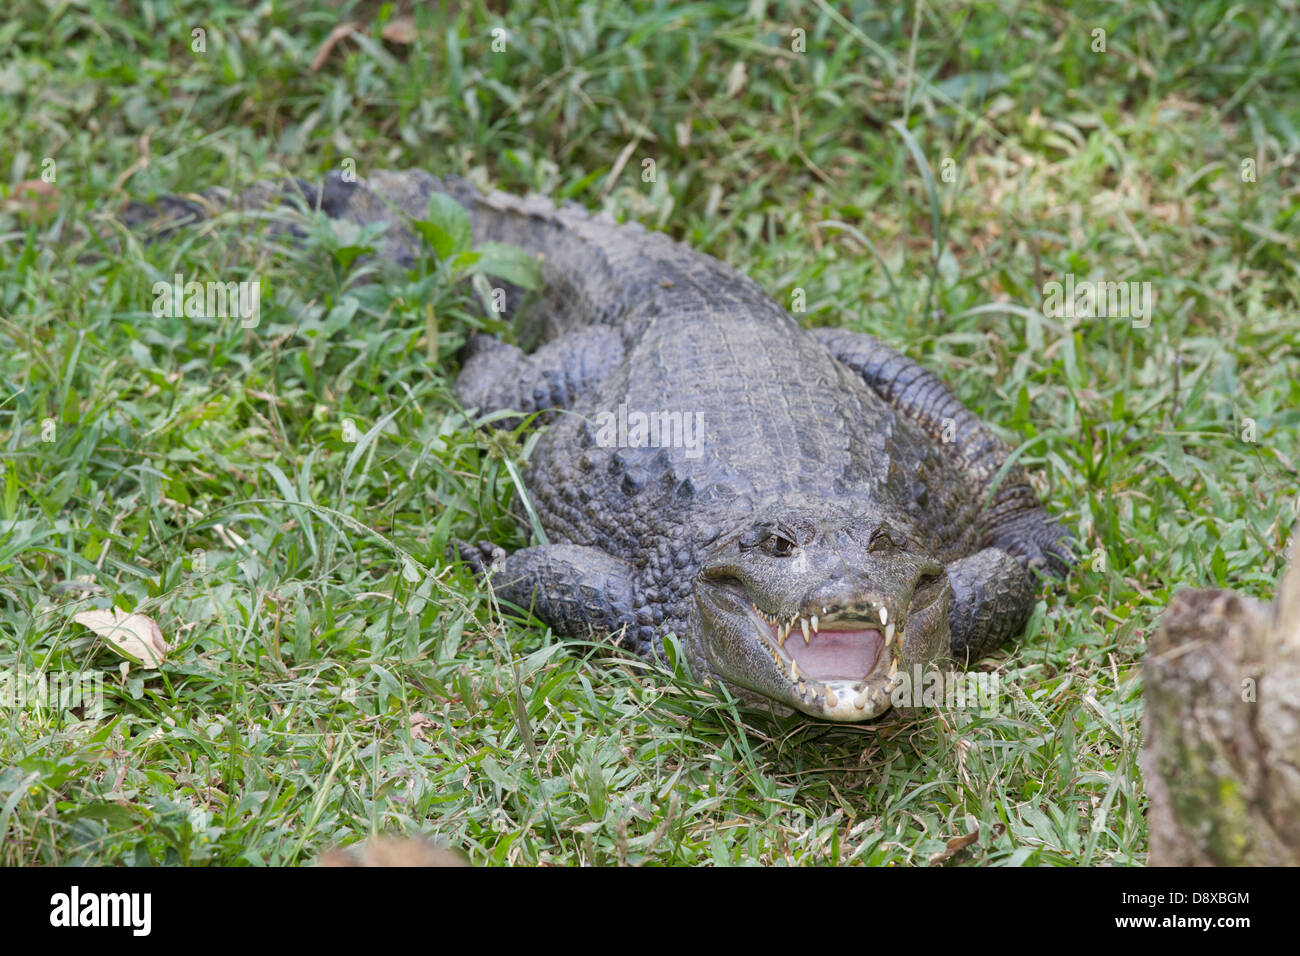 Brillentragende Brillenkaiman, Caiman Crocodilus, Cali Zoo, Cali, Kolumbien Stockfoto